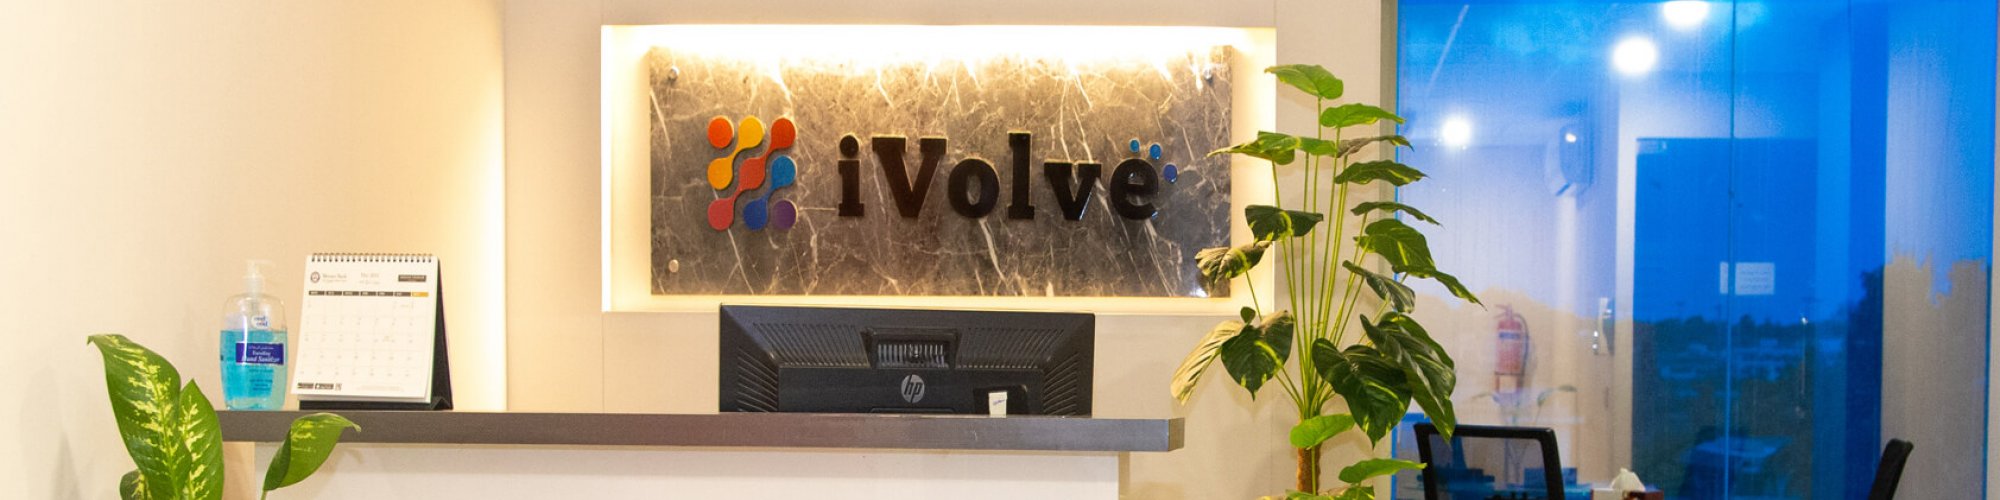 iVolve Technologies Pvt. Ltd.